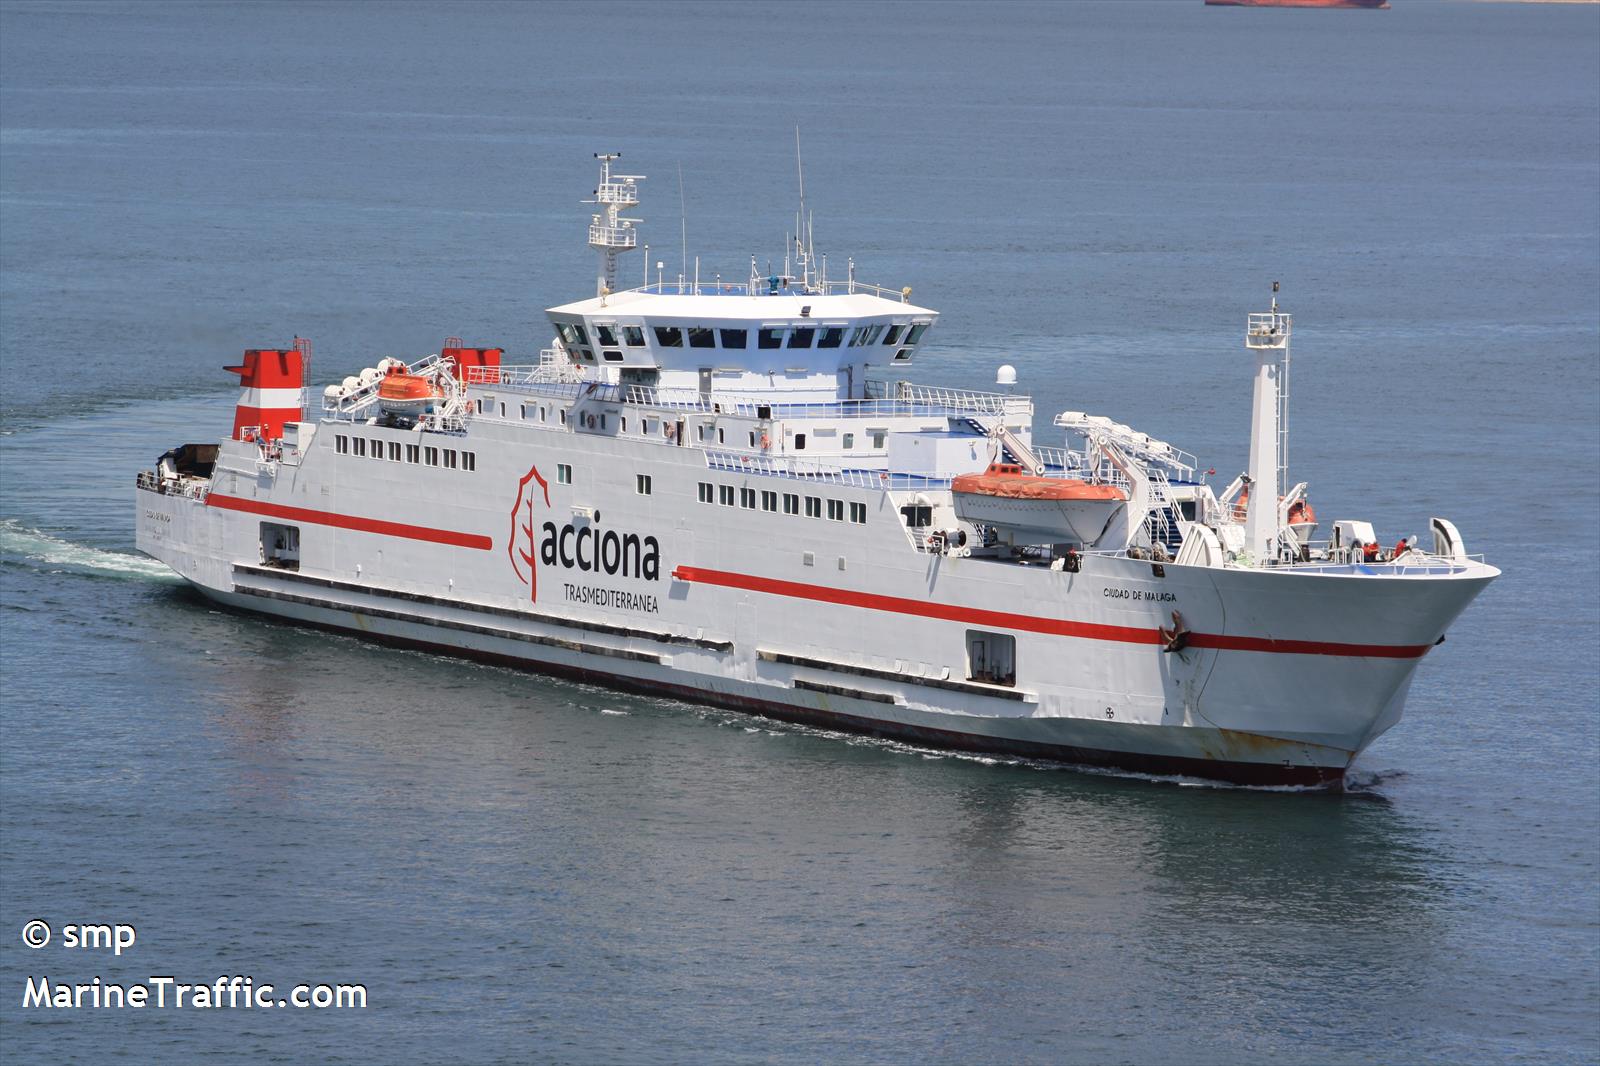 c.de malaga (Passenger/Ro-Ro Cargo Ship) - IMO 9080015, MMSI 224549000, Call Sign EAJW under the flag of Spain